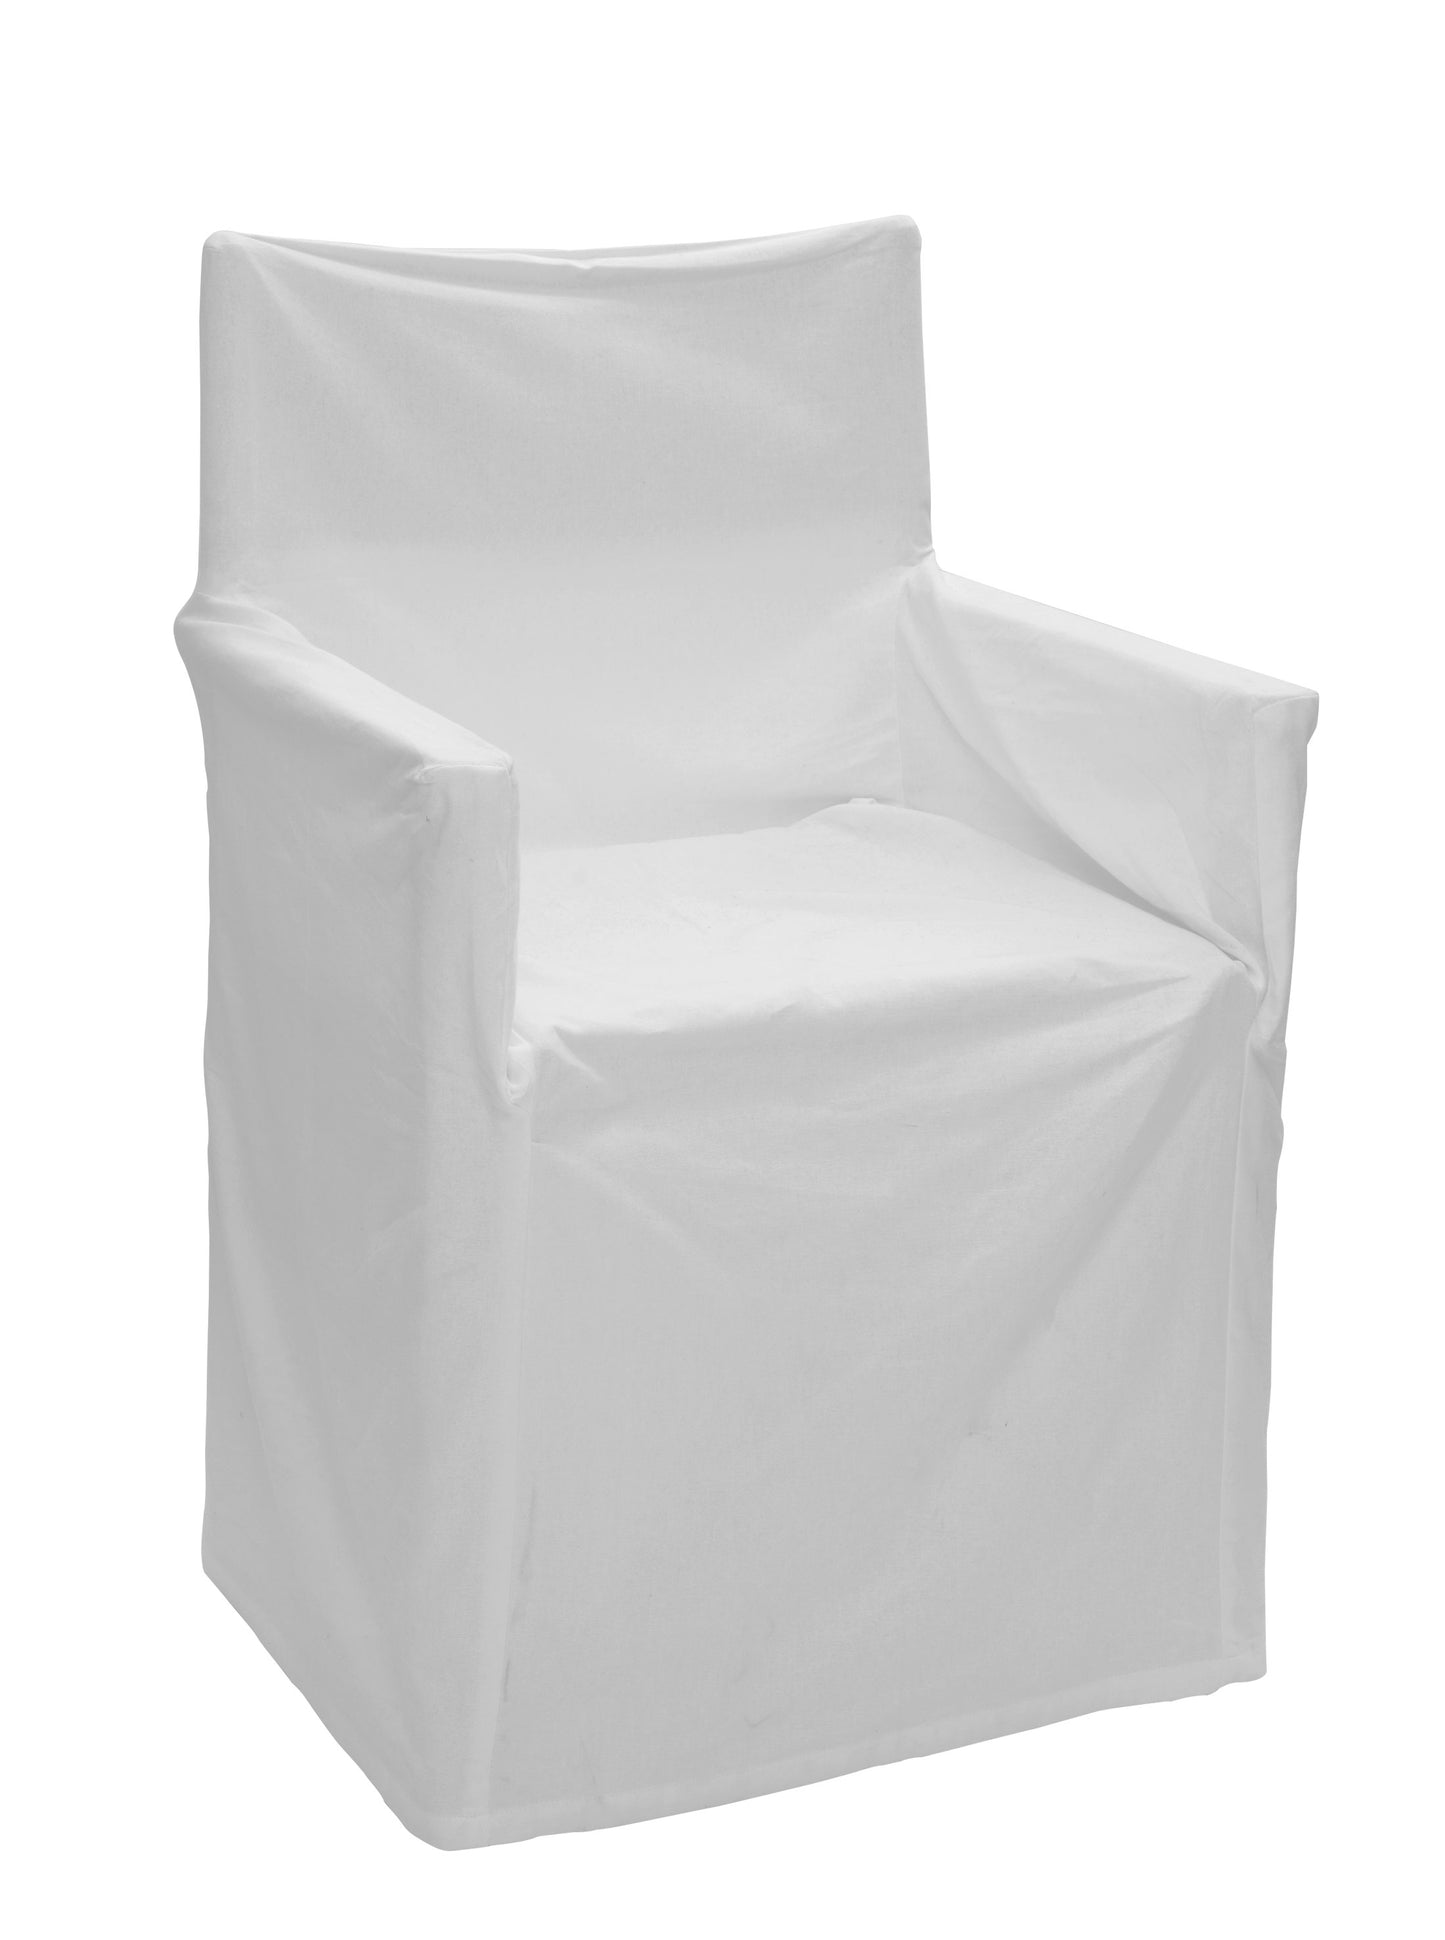 RANS Alfresco Director Chair Covers 100% Cotton